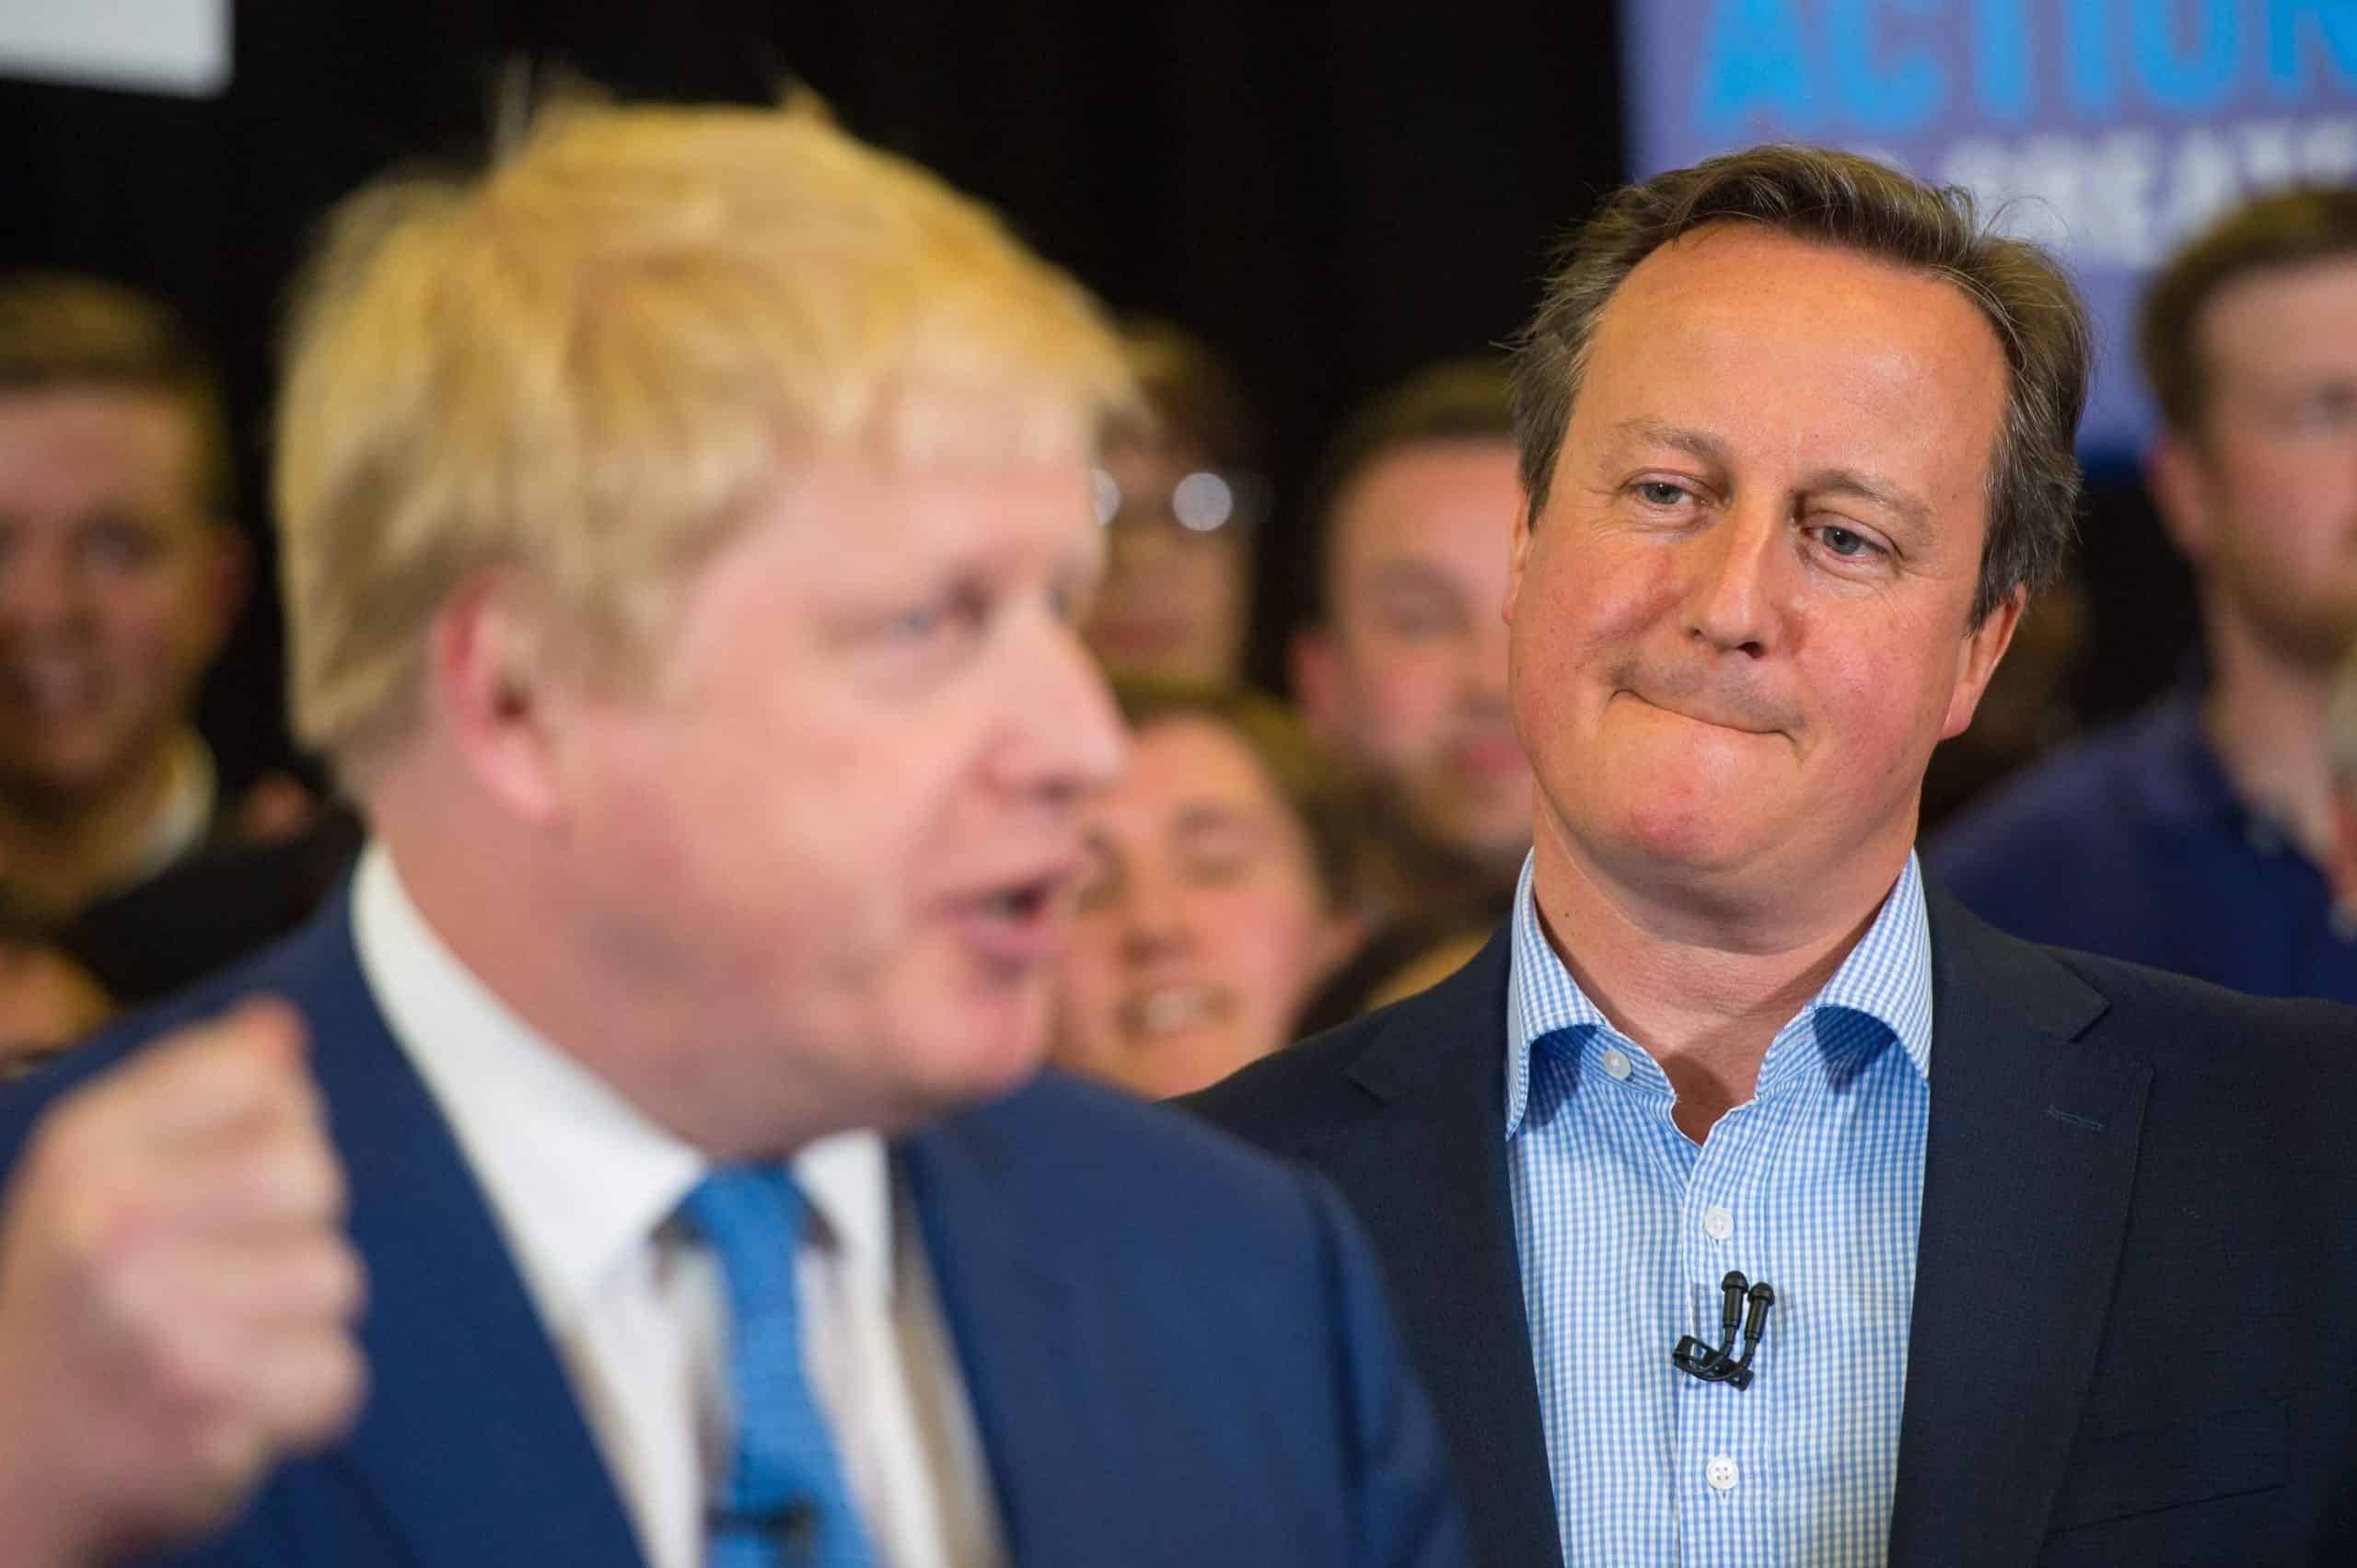 David Cameron is the latest ex-PM to receive a coronavirus vaccine